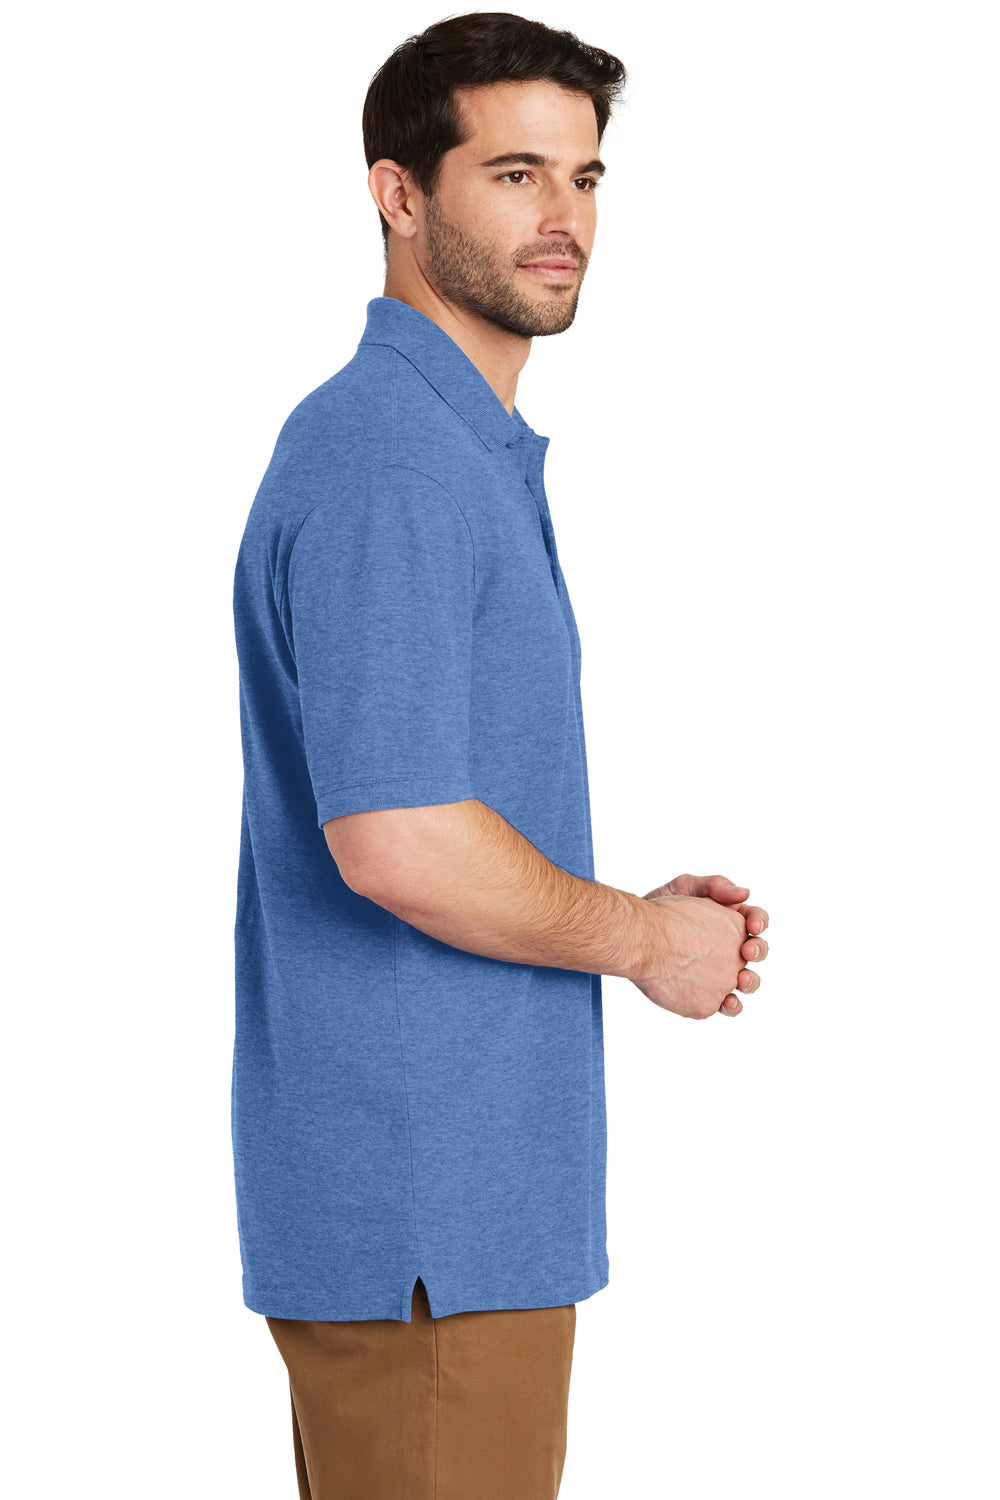 Port Authority K8000 Mens Wrinkle Resistant Short Sleeve Polo Shirt Heather Blue Side